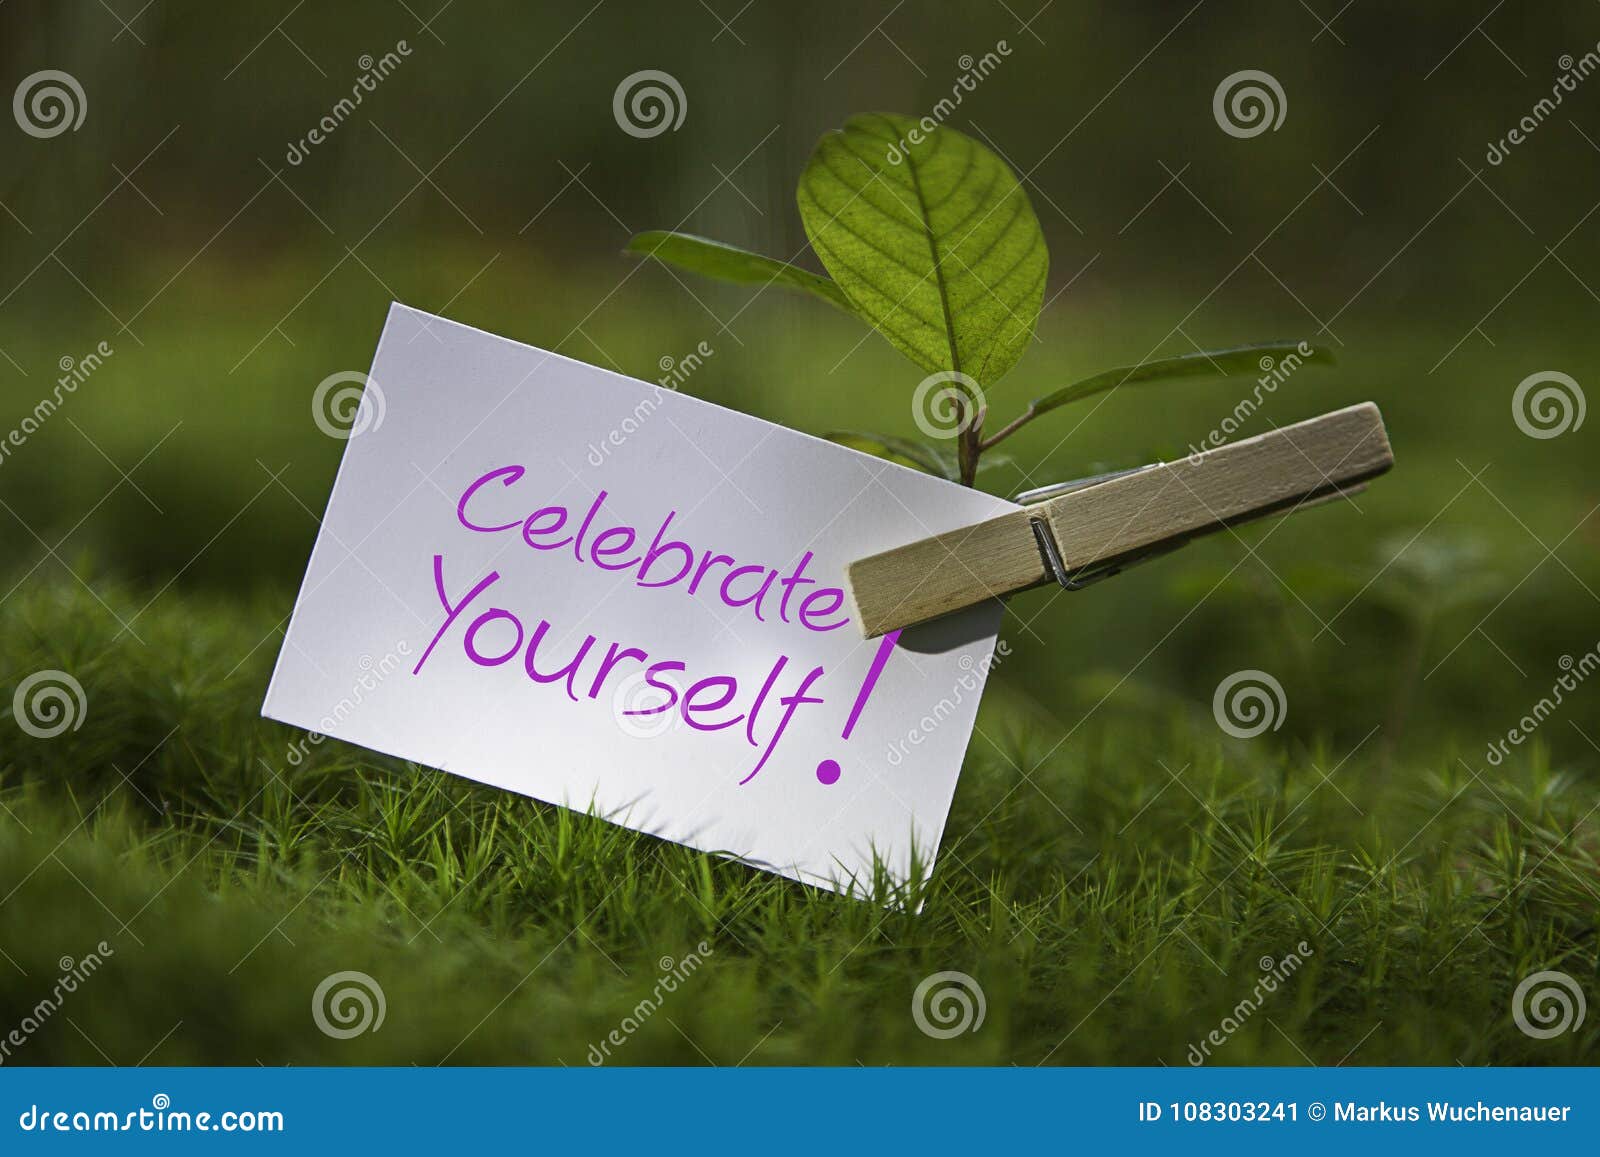 celebrate yourself!